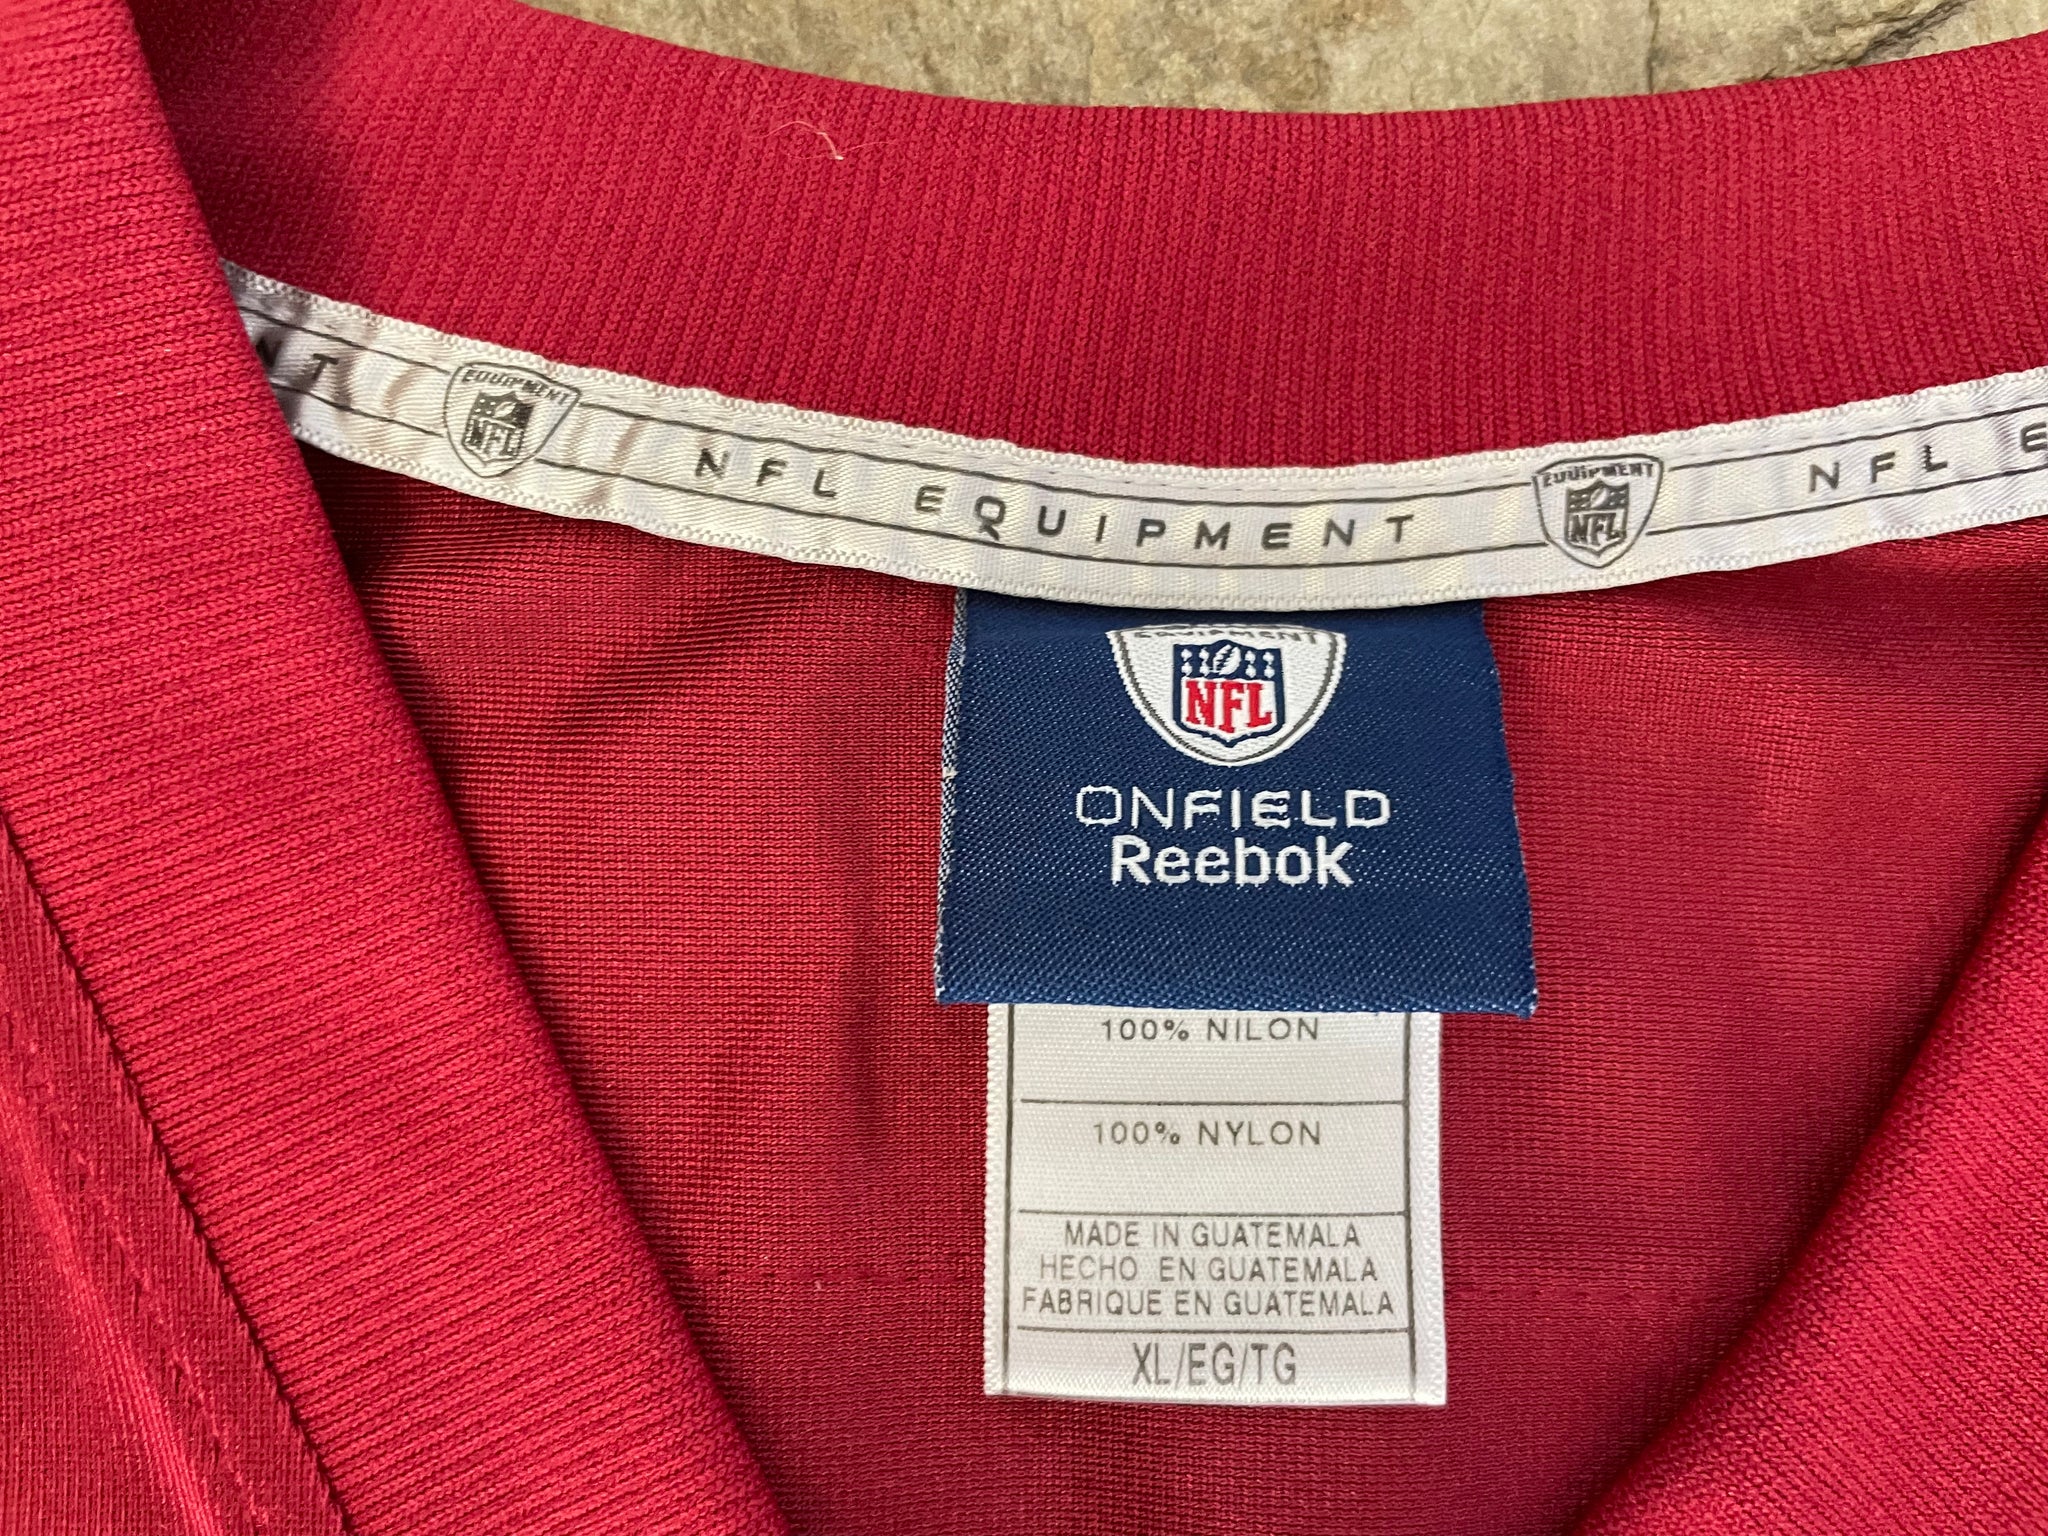 00's Pat Tillman Arizona Cardinals Reebok NFL Jersey Size XL